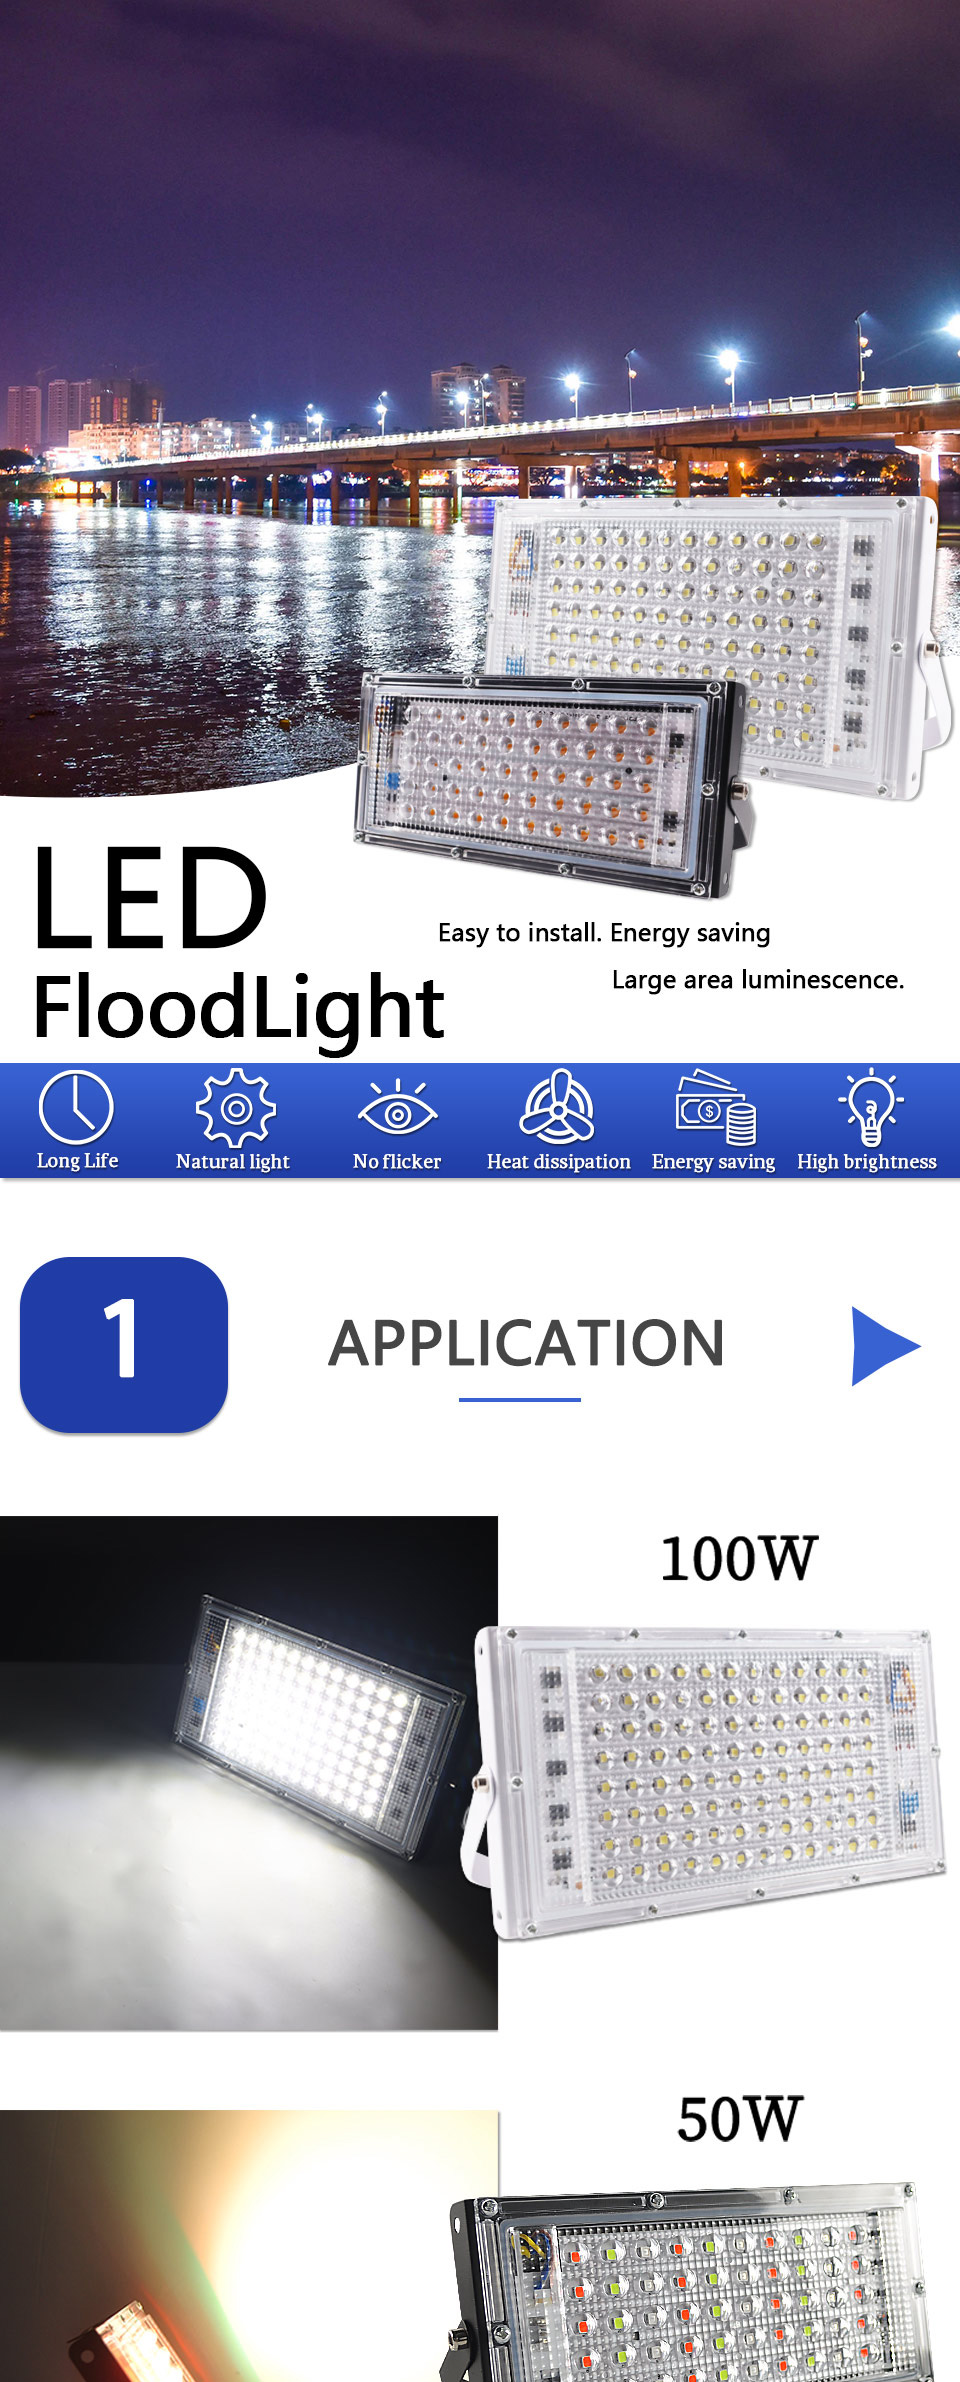 LED Flood Light 50W 100W led Floodlight cold warm RGB AC220V 240V LED street Lamp waterproof IP65 led spotlight outdoor Lighting